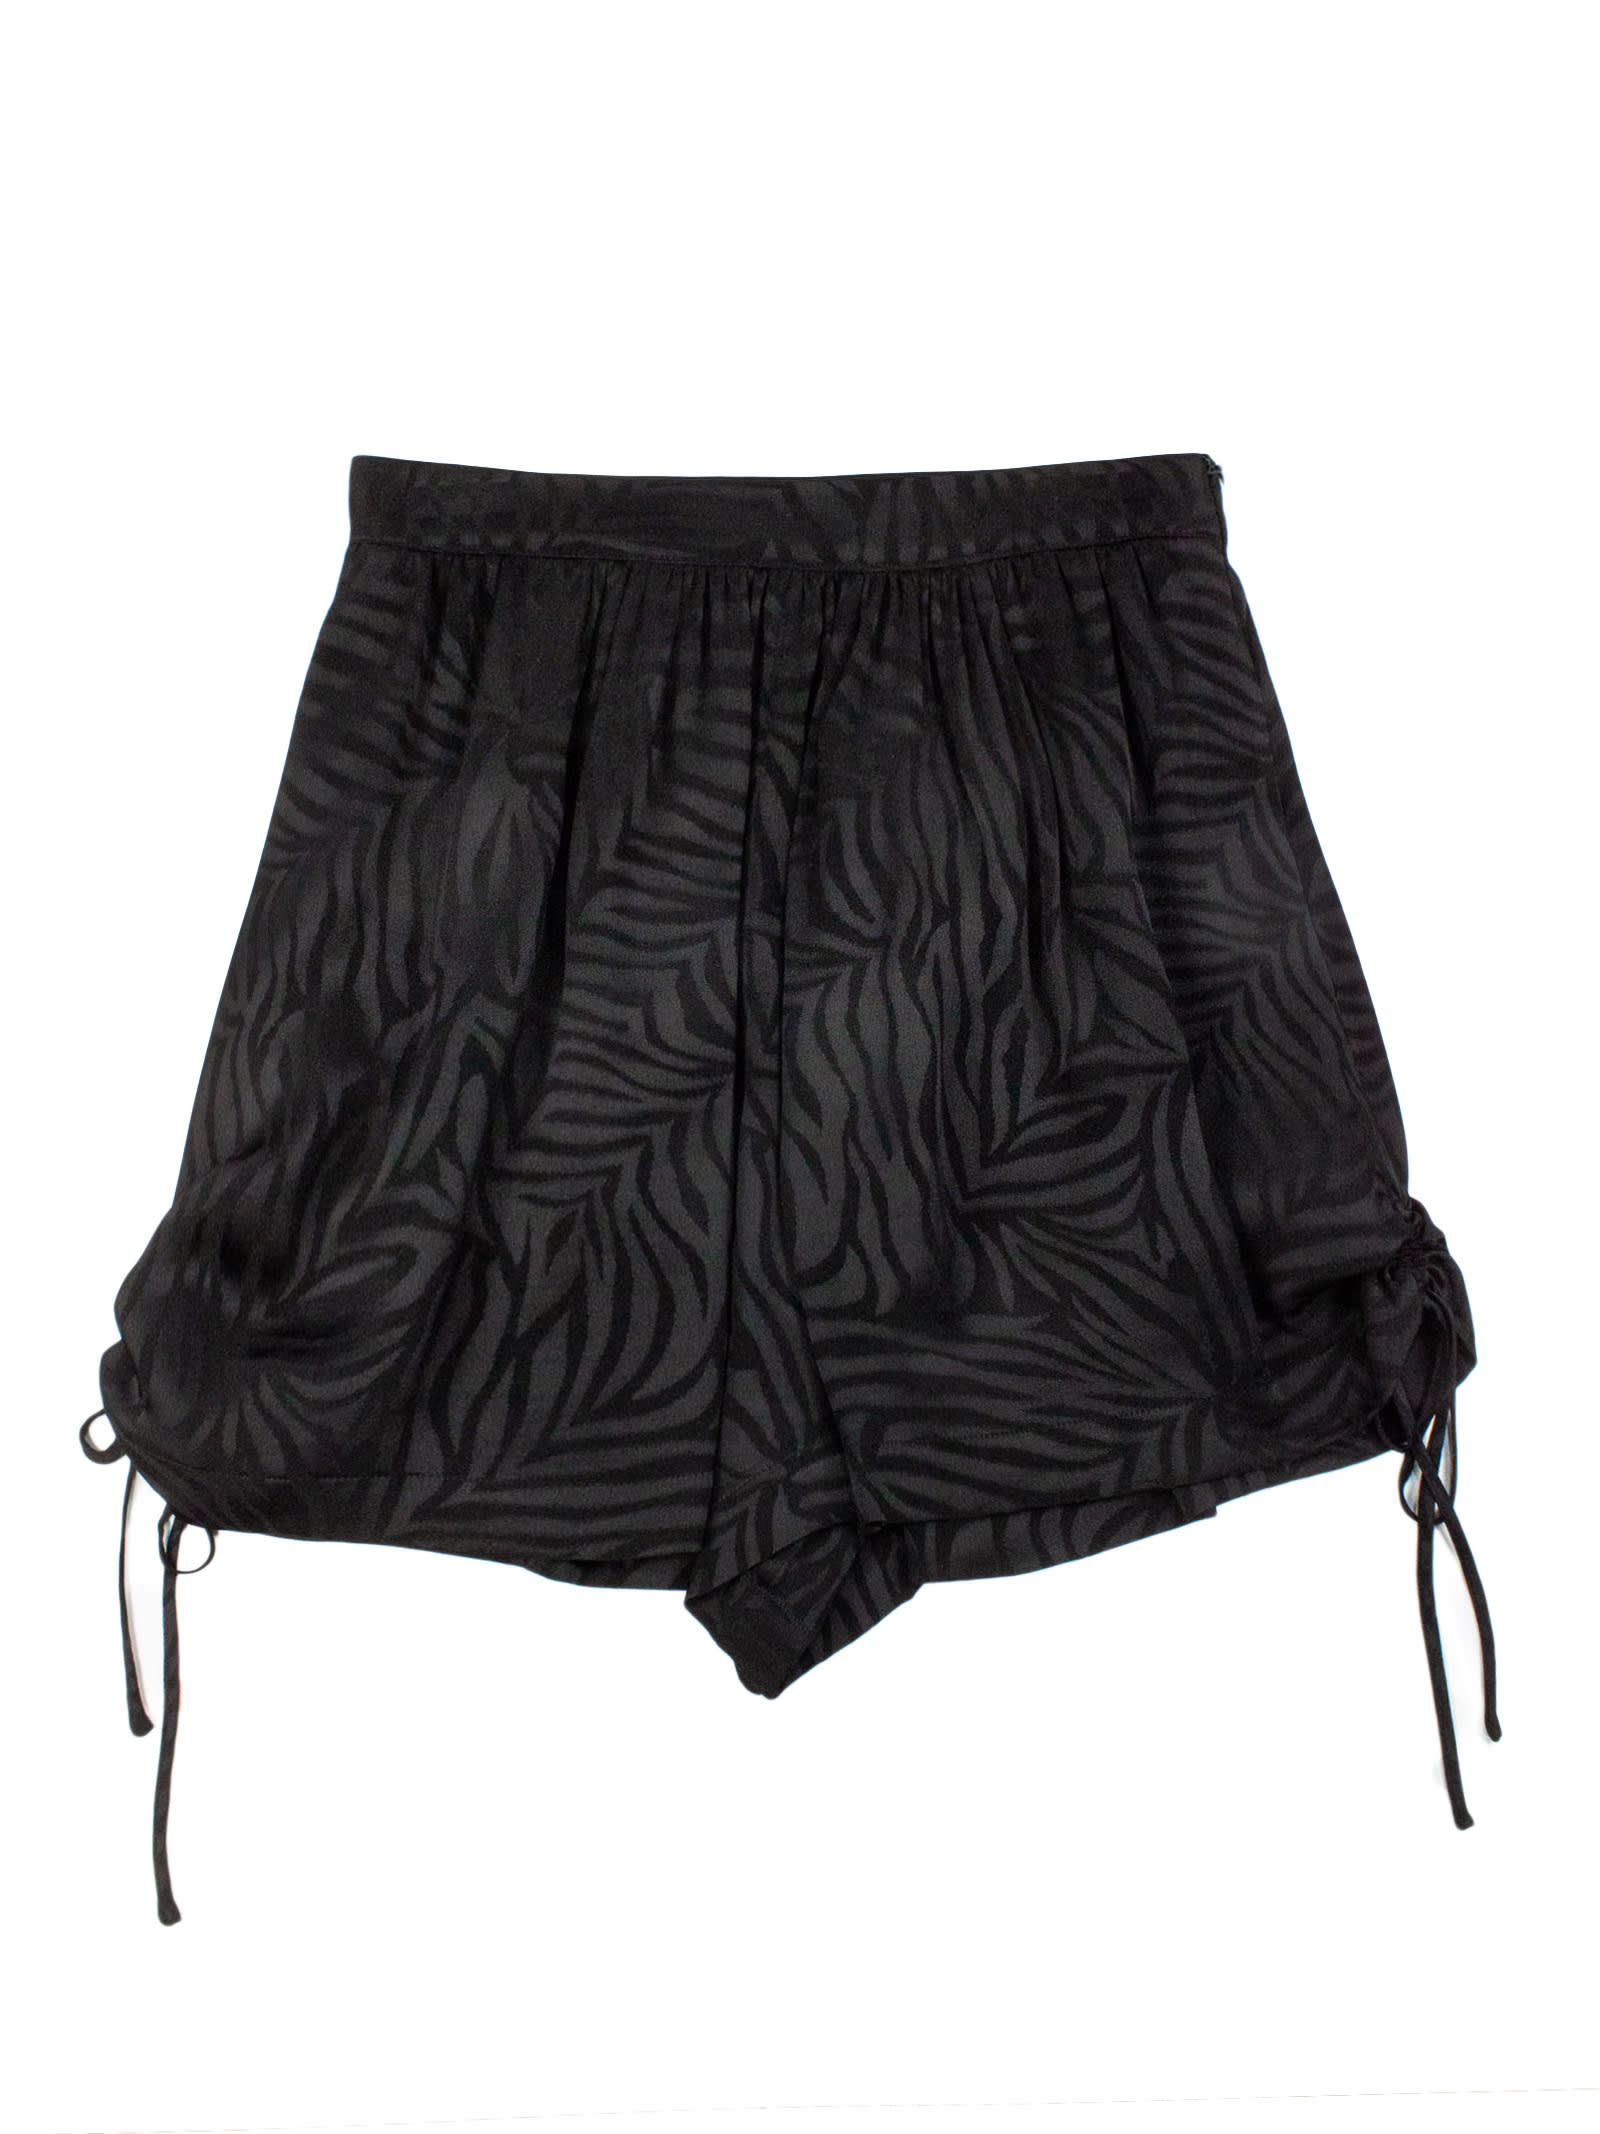 Federica Tosi Zebra-print Drawstring Shorts